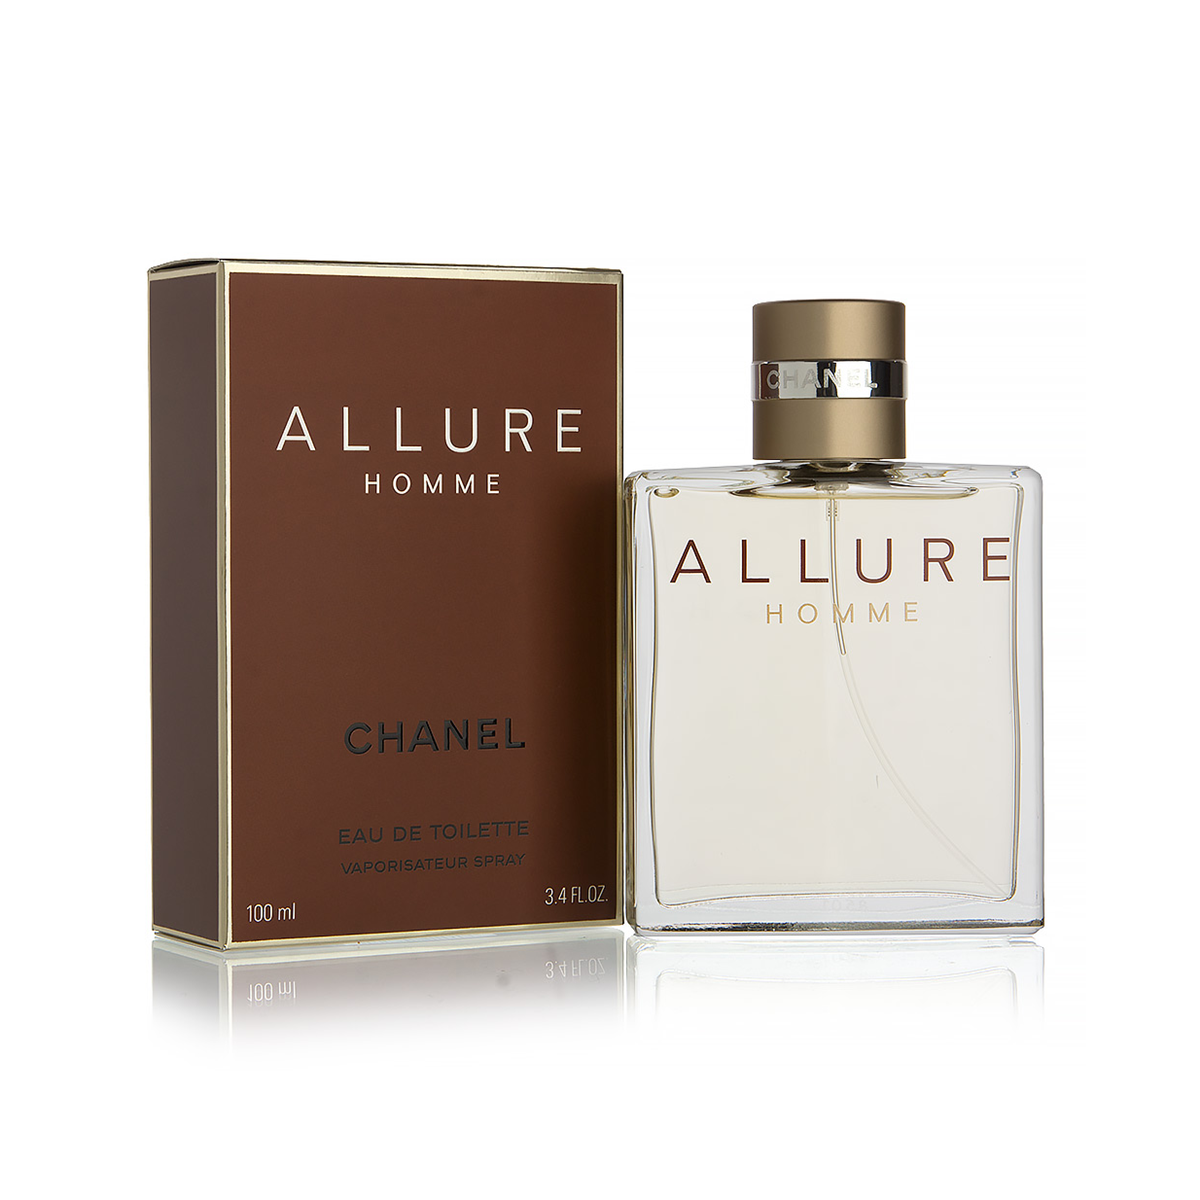 Chanel Allure Homme E.D.T 100ML